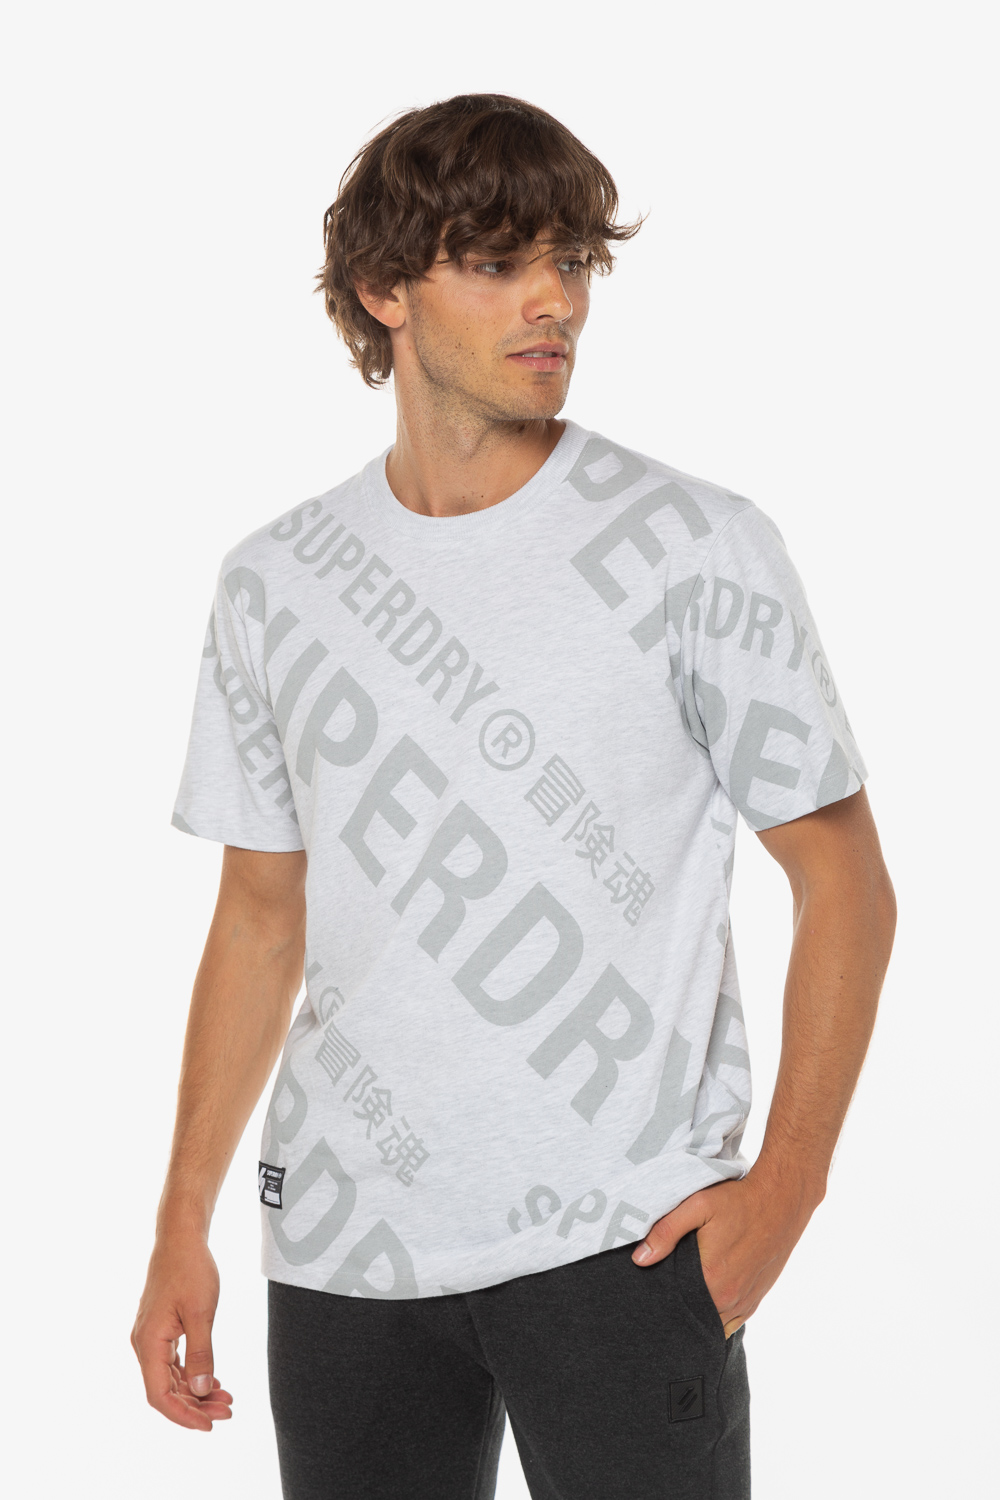 Luxury Sport Loose T-Shirt - Superdry